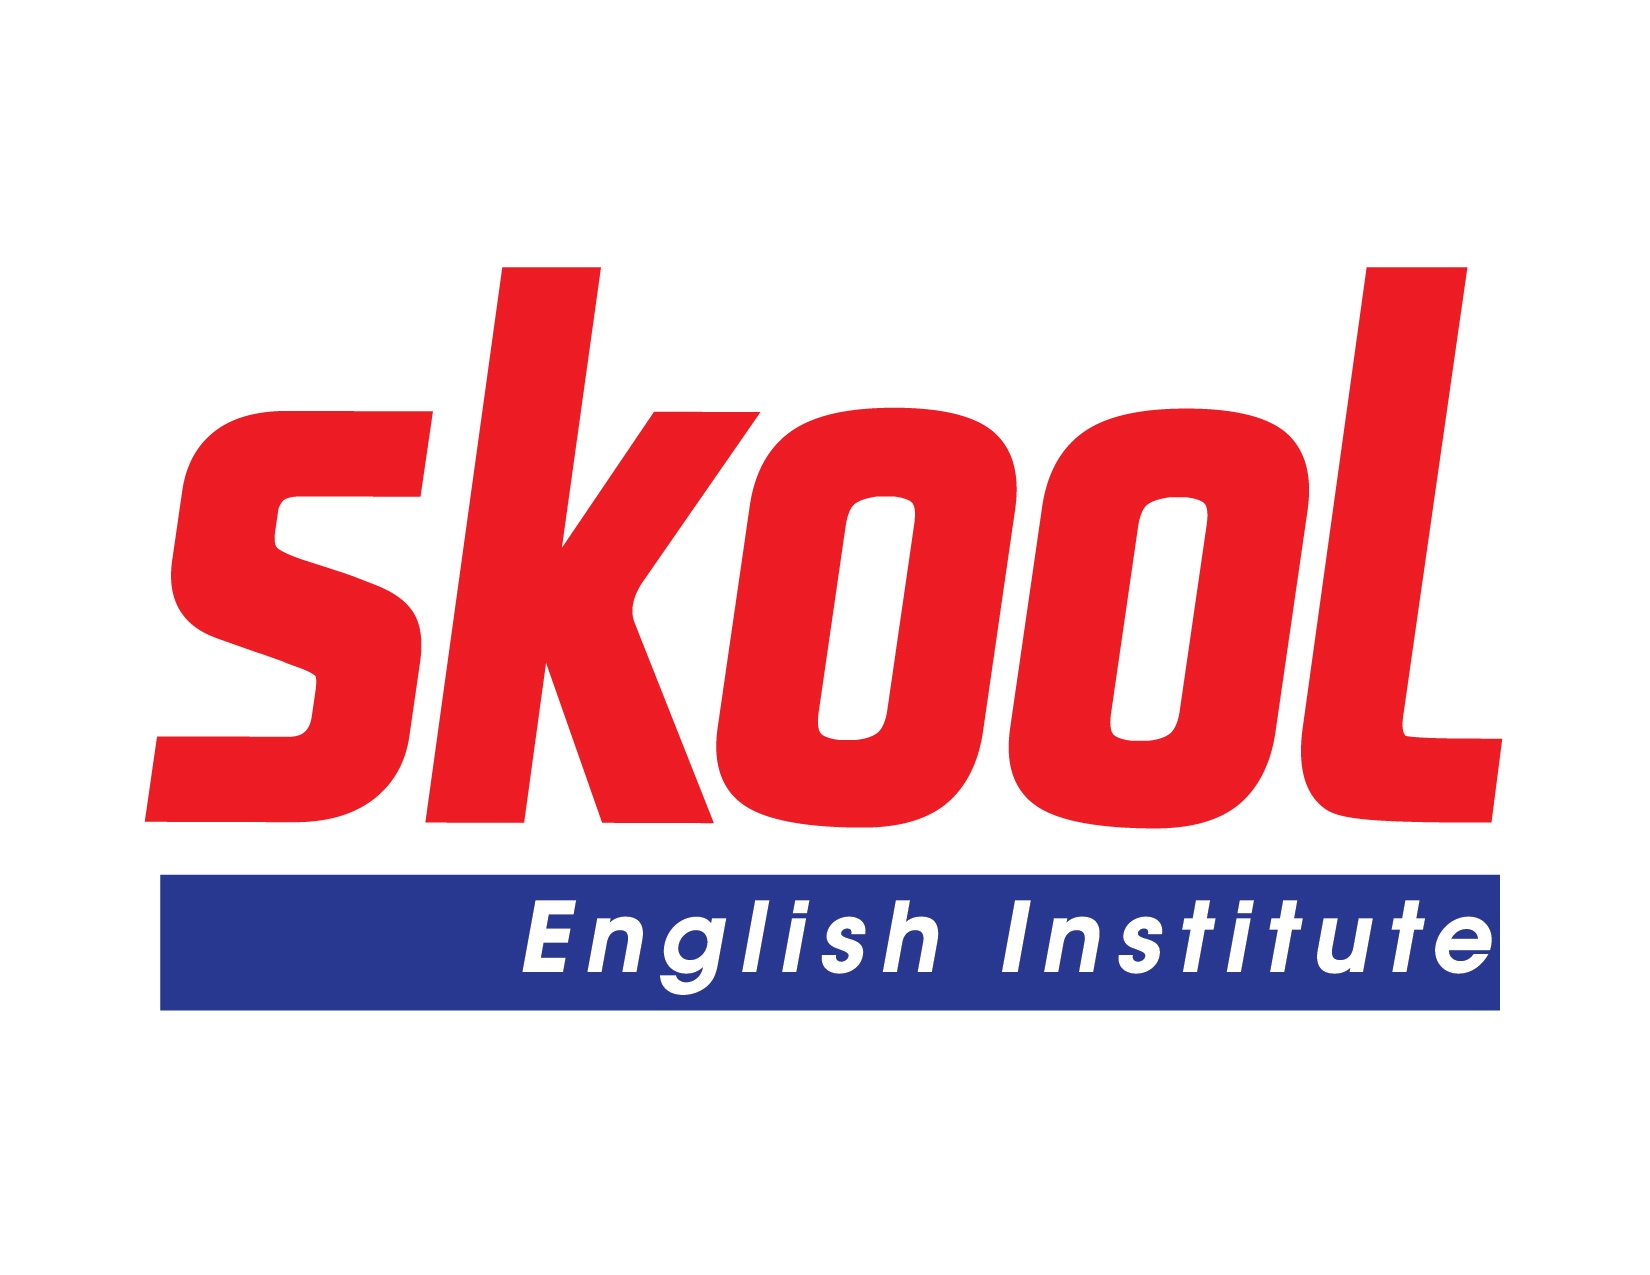 Skool English